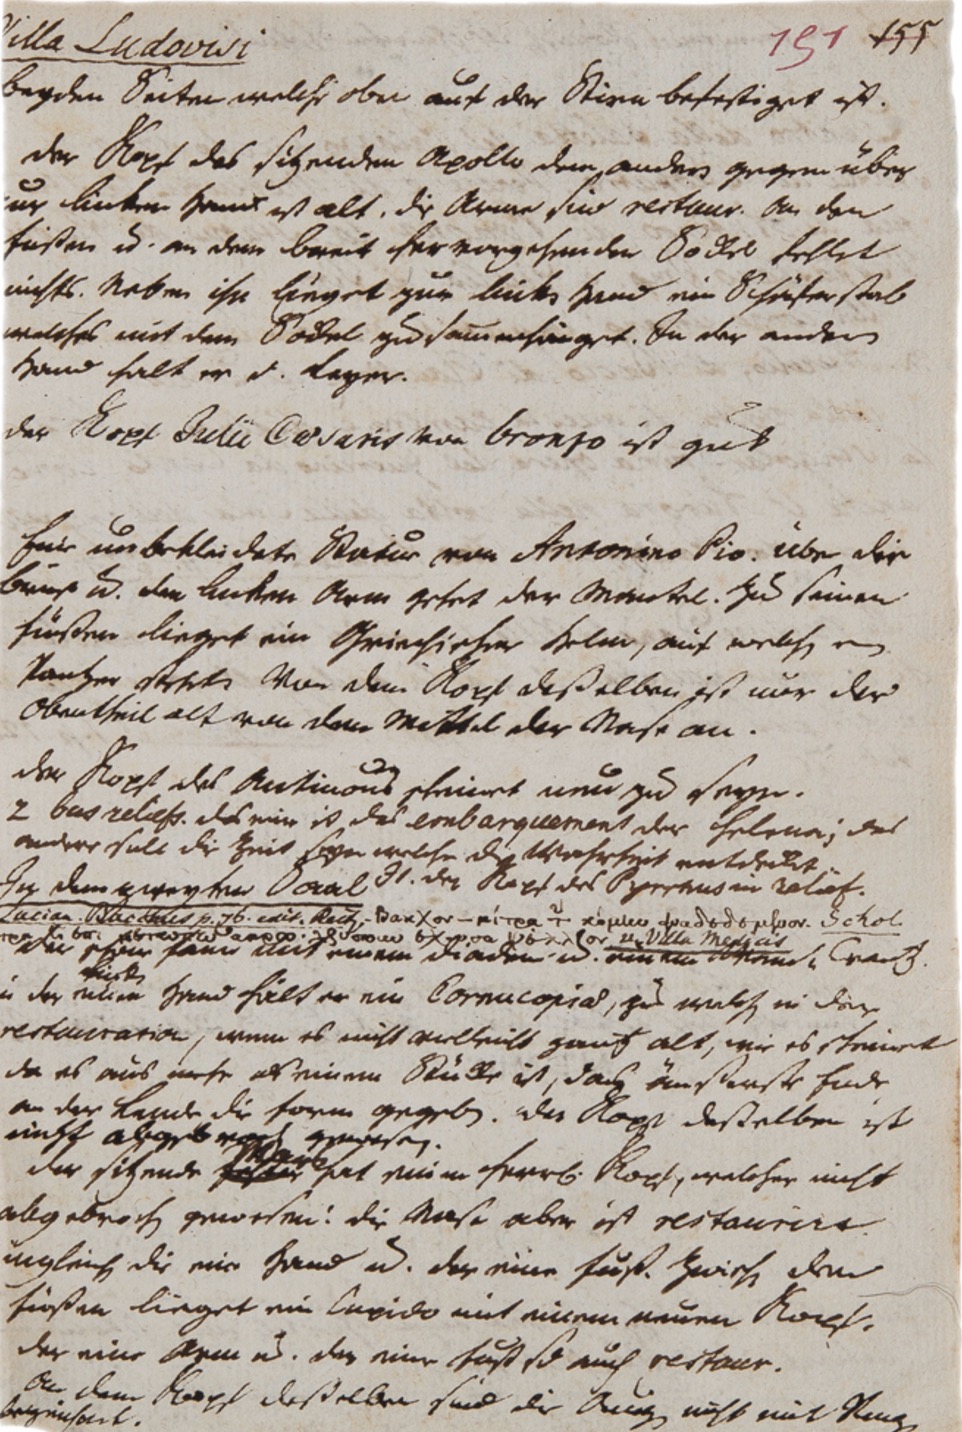 A page from Johann Joachim Winckelmann’s manuscript recording his 1756 examination